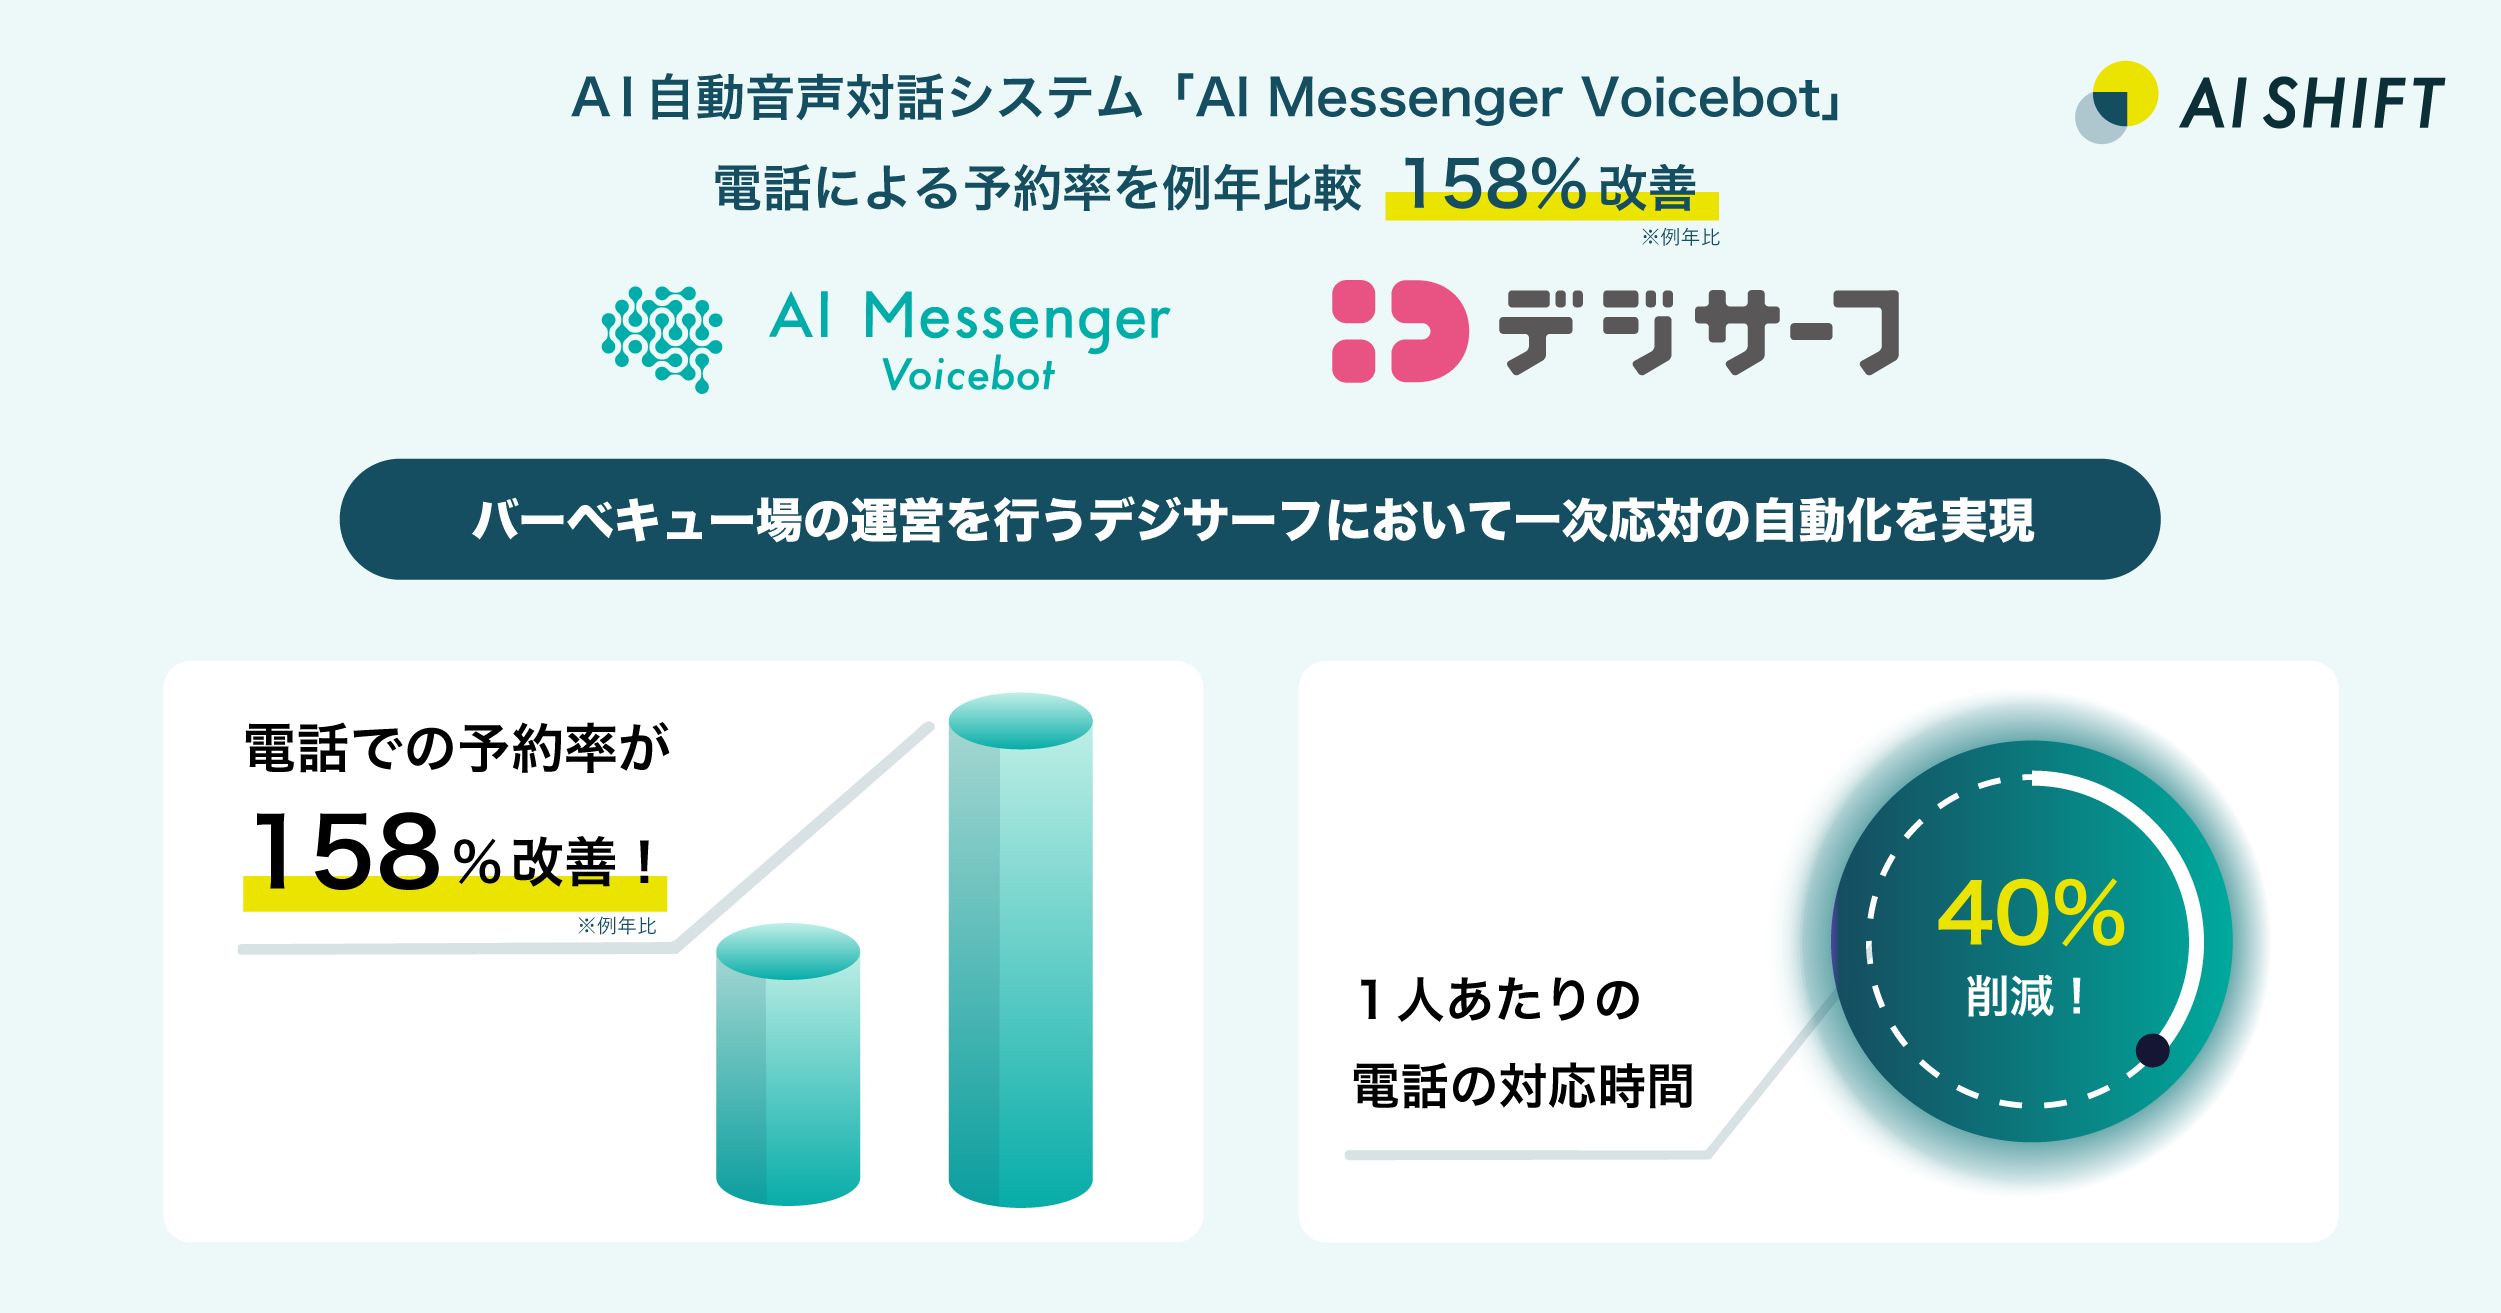 AI自動音声対話システム「AI Messenger Voicebot」、バーベキュー場の運営を行うデジサーフにおいて電話による予約率を例年比158%改善